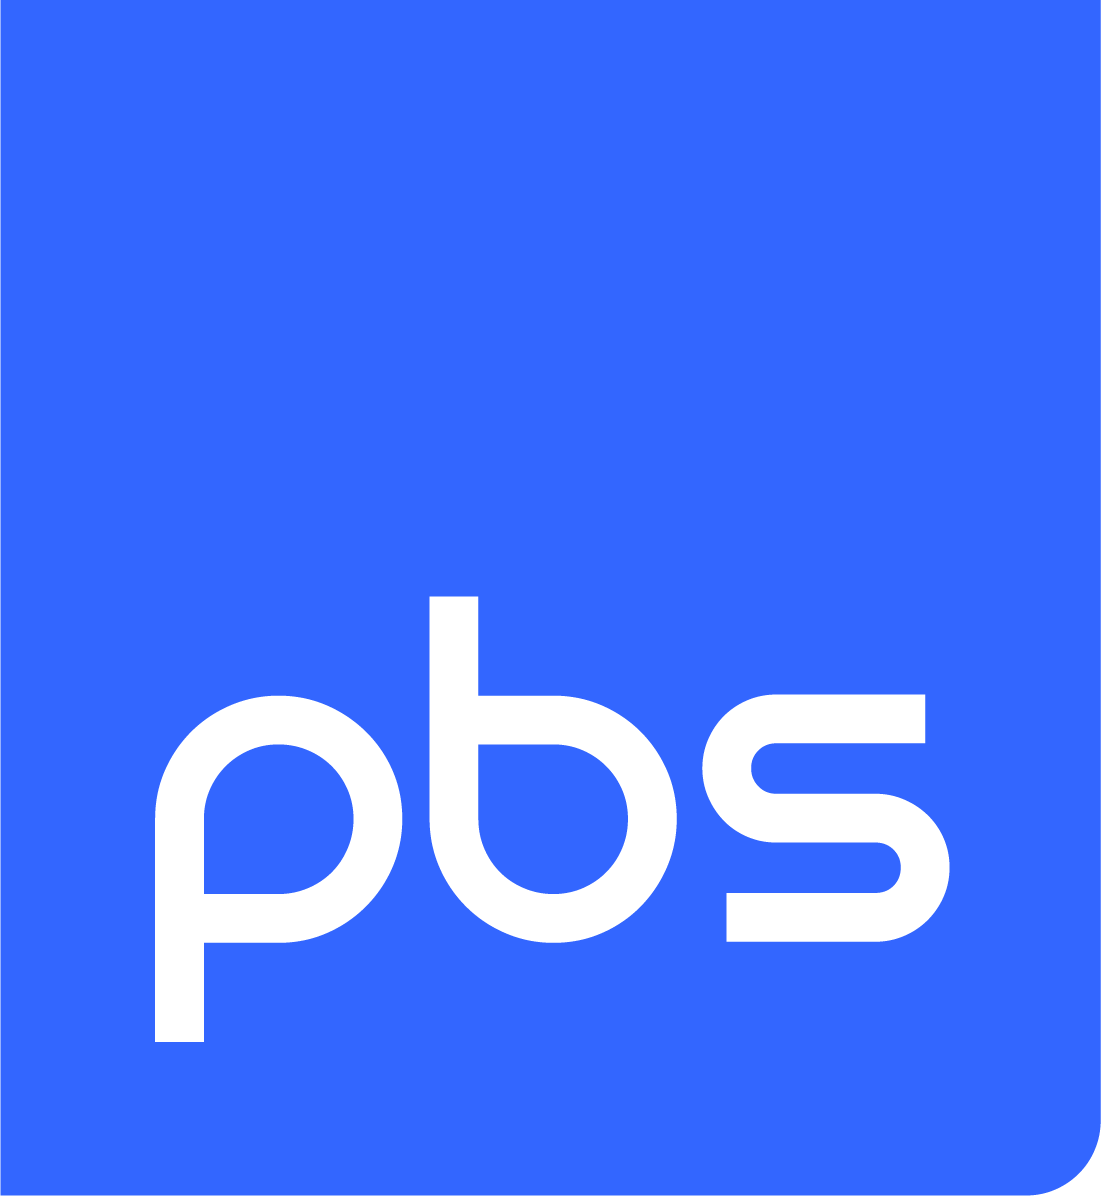 PBS Group